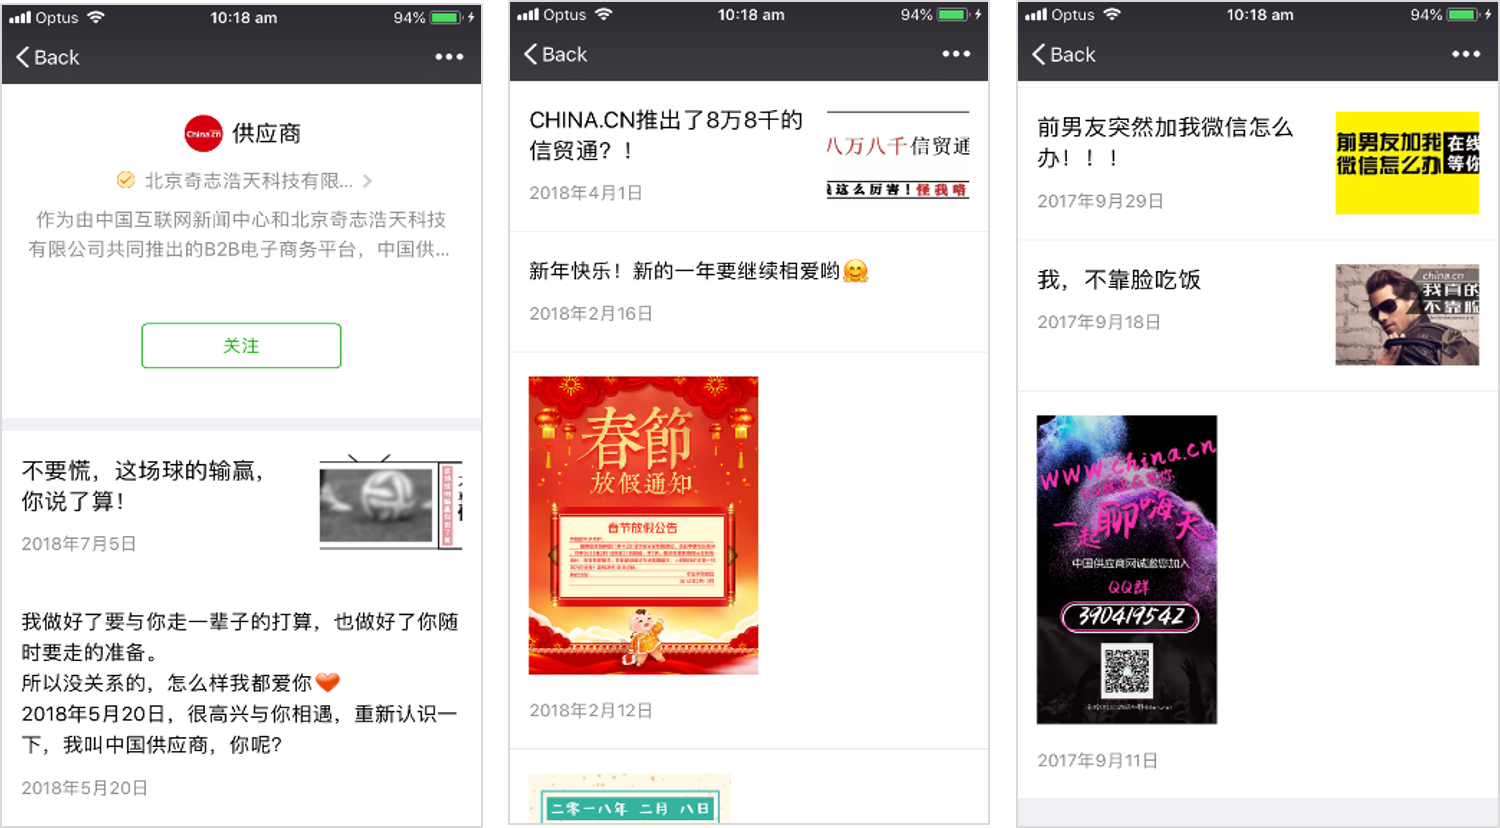 China.cn ecommerce b2b platform